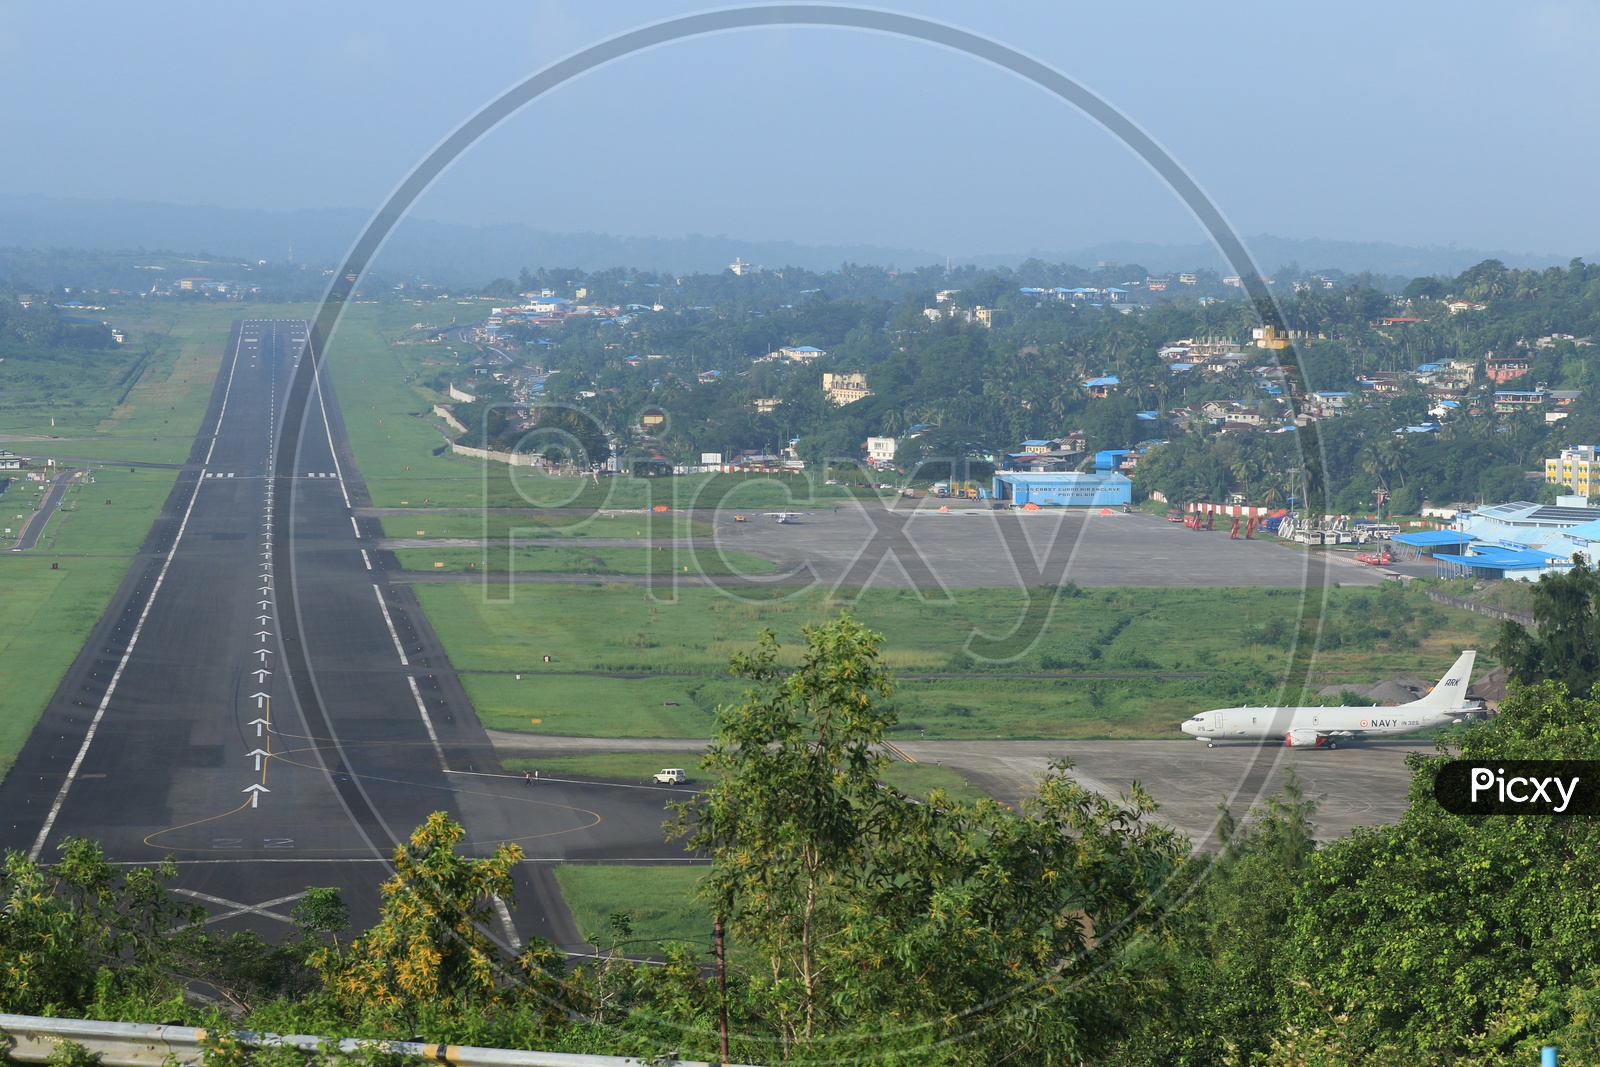 Veer Savarkar International Airport or Port Blair Airport